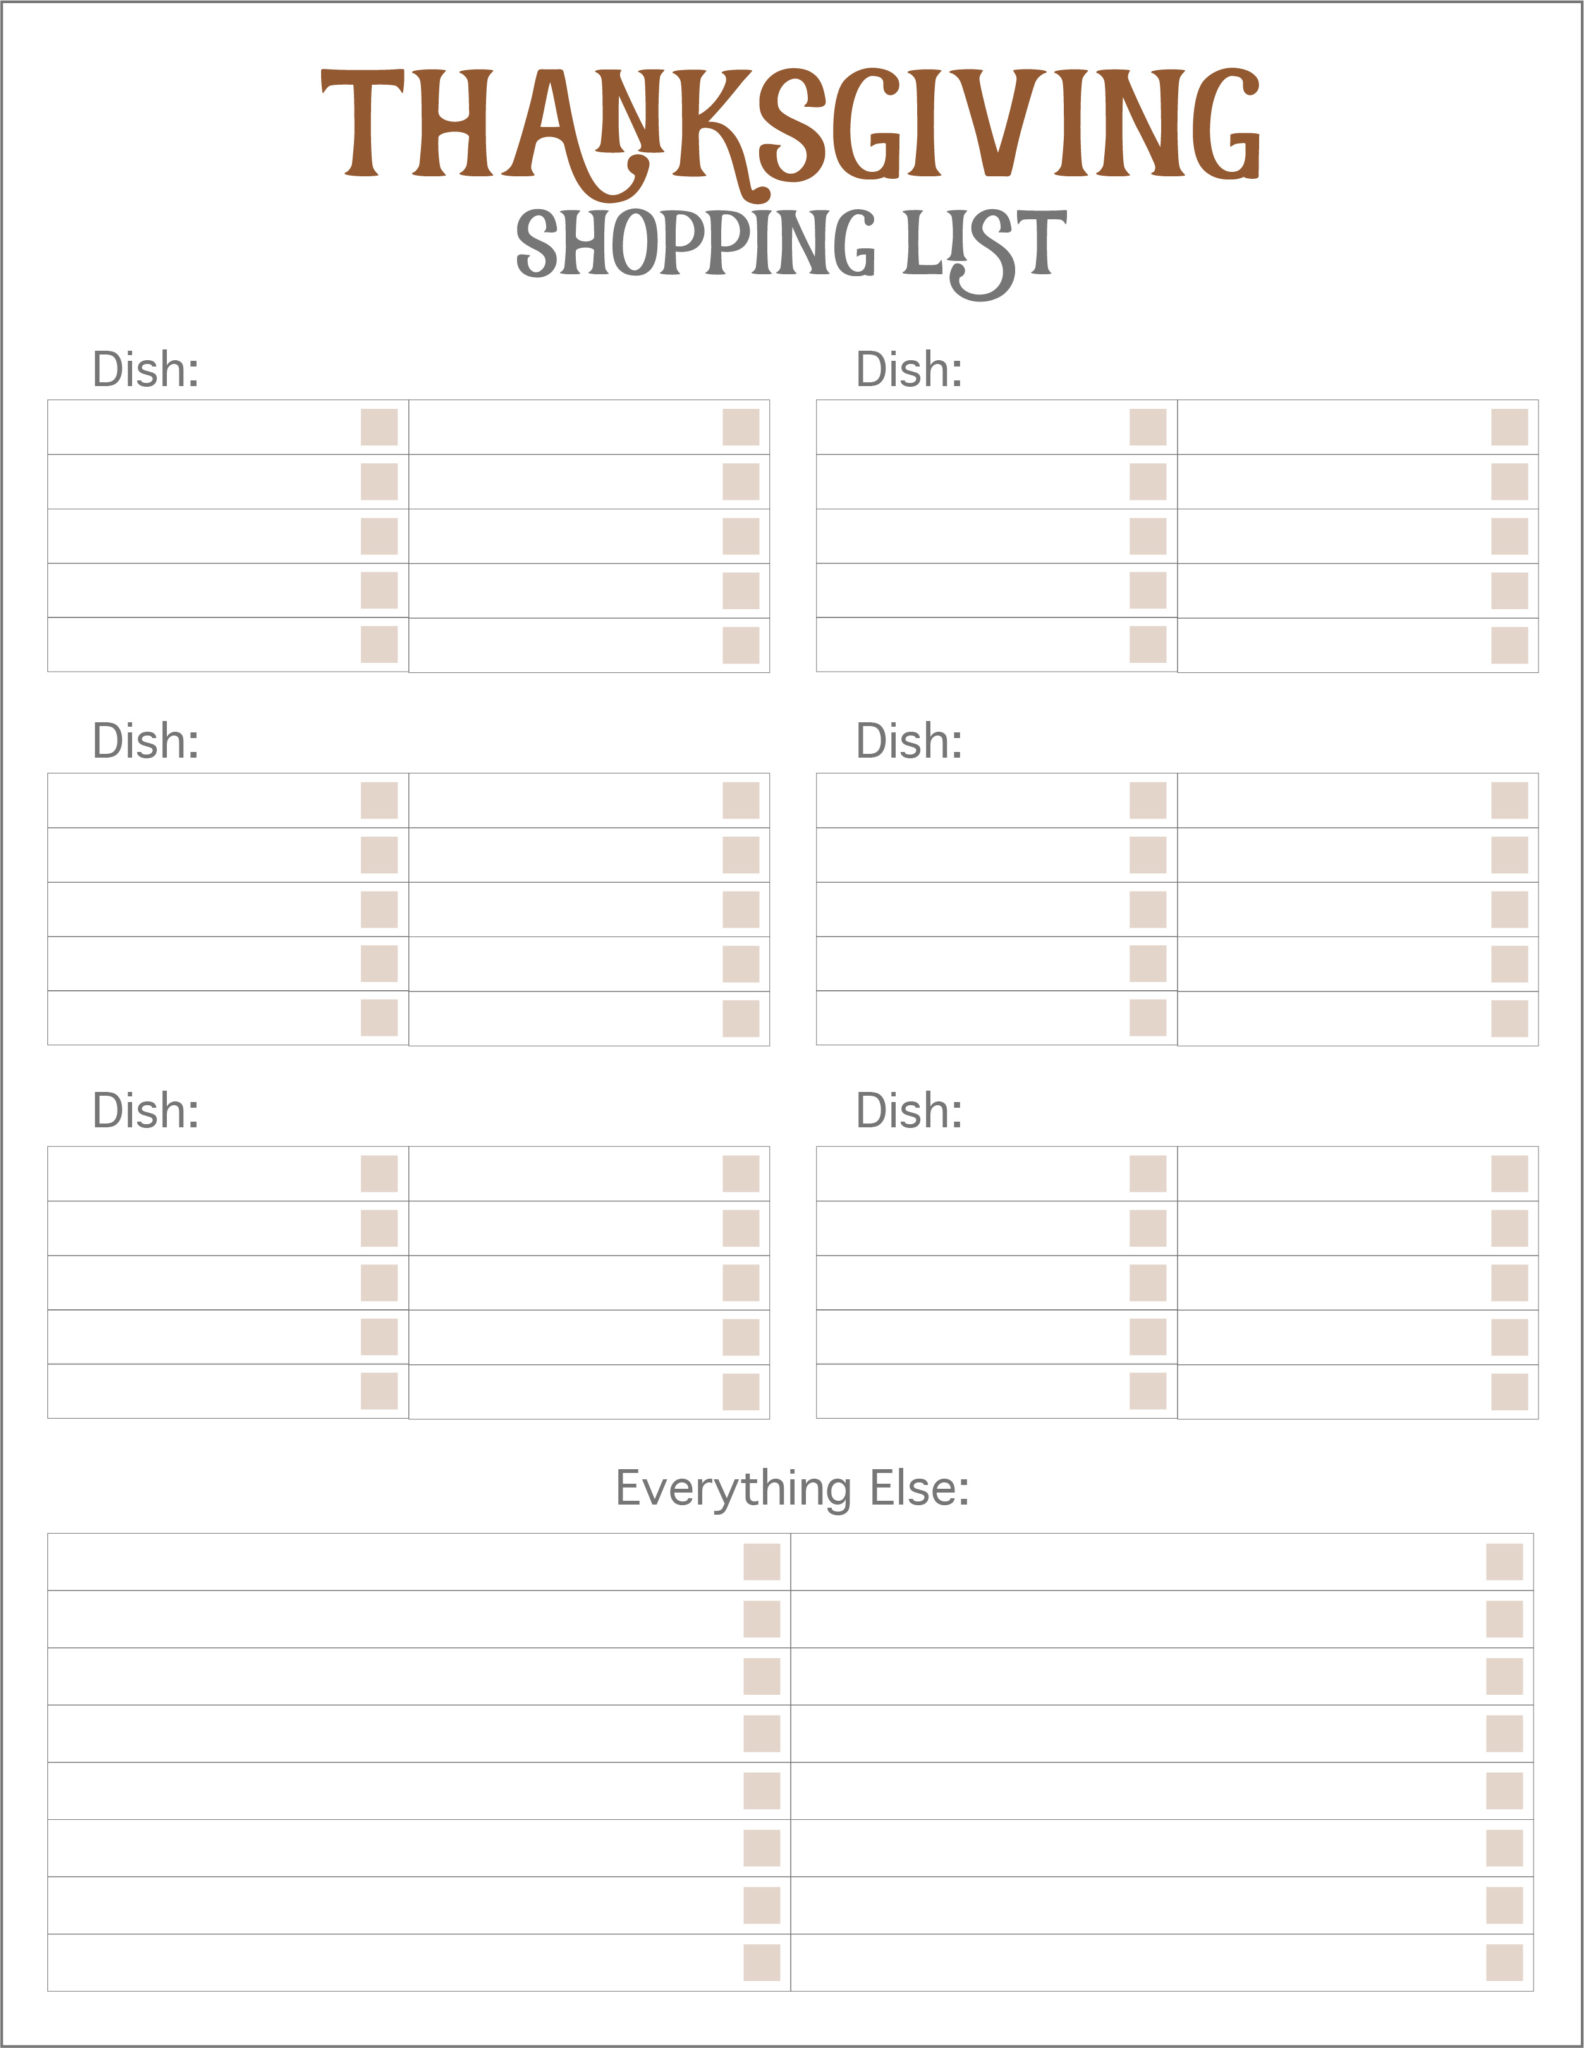 Thanksgiving shopping list. Thanksgiving list. Dish list